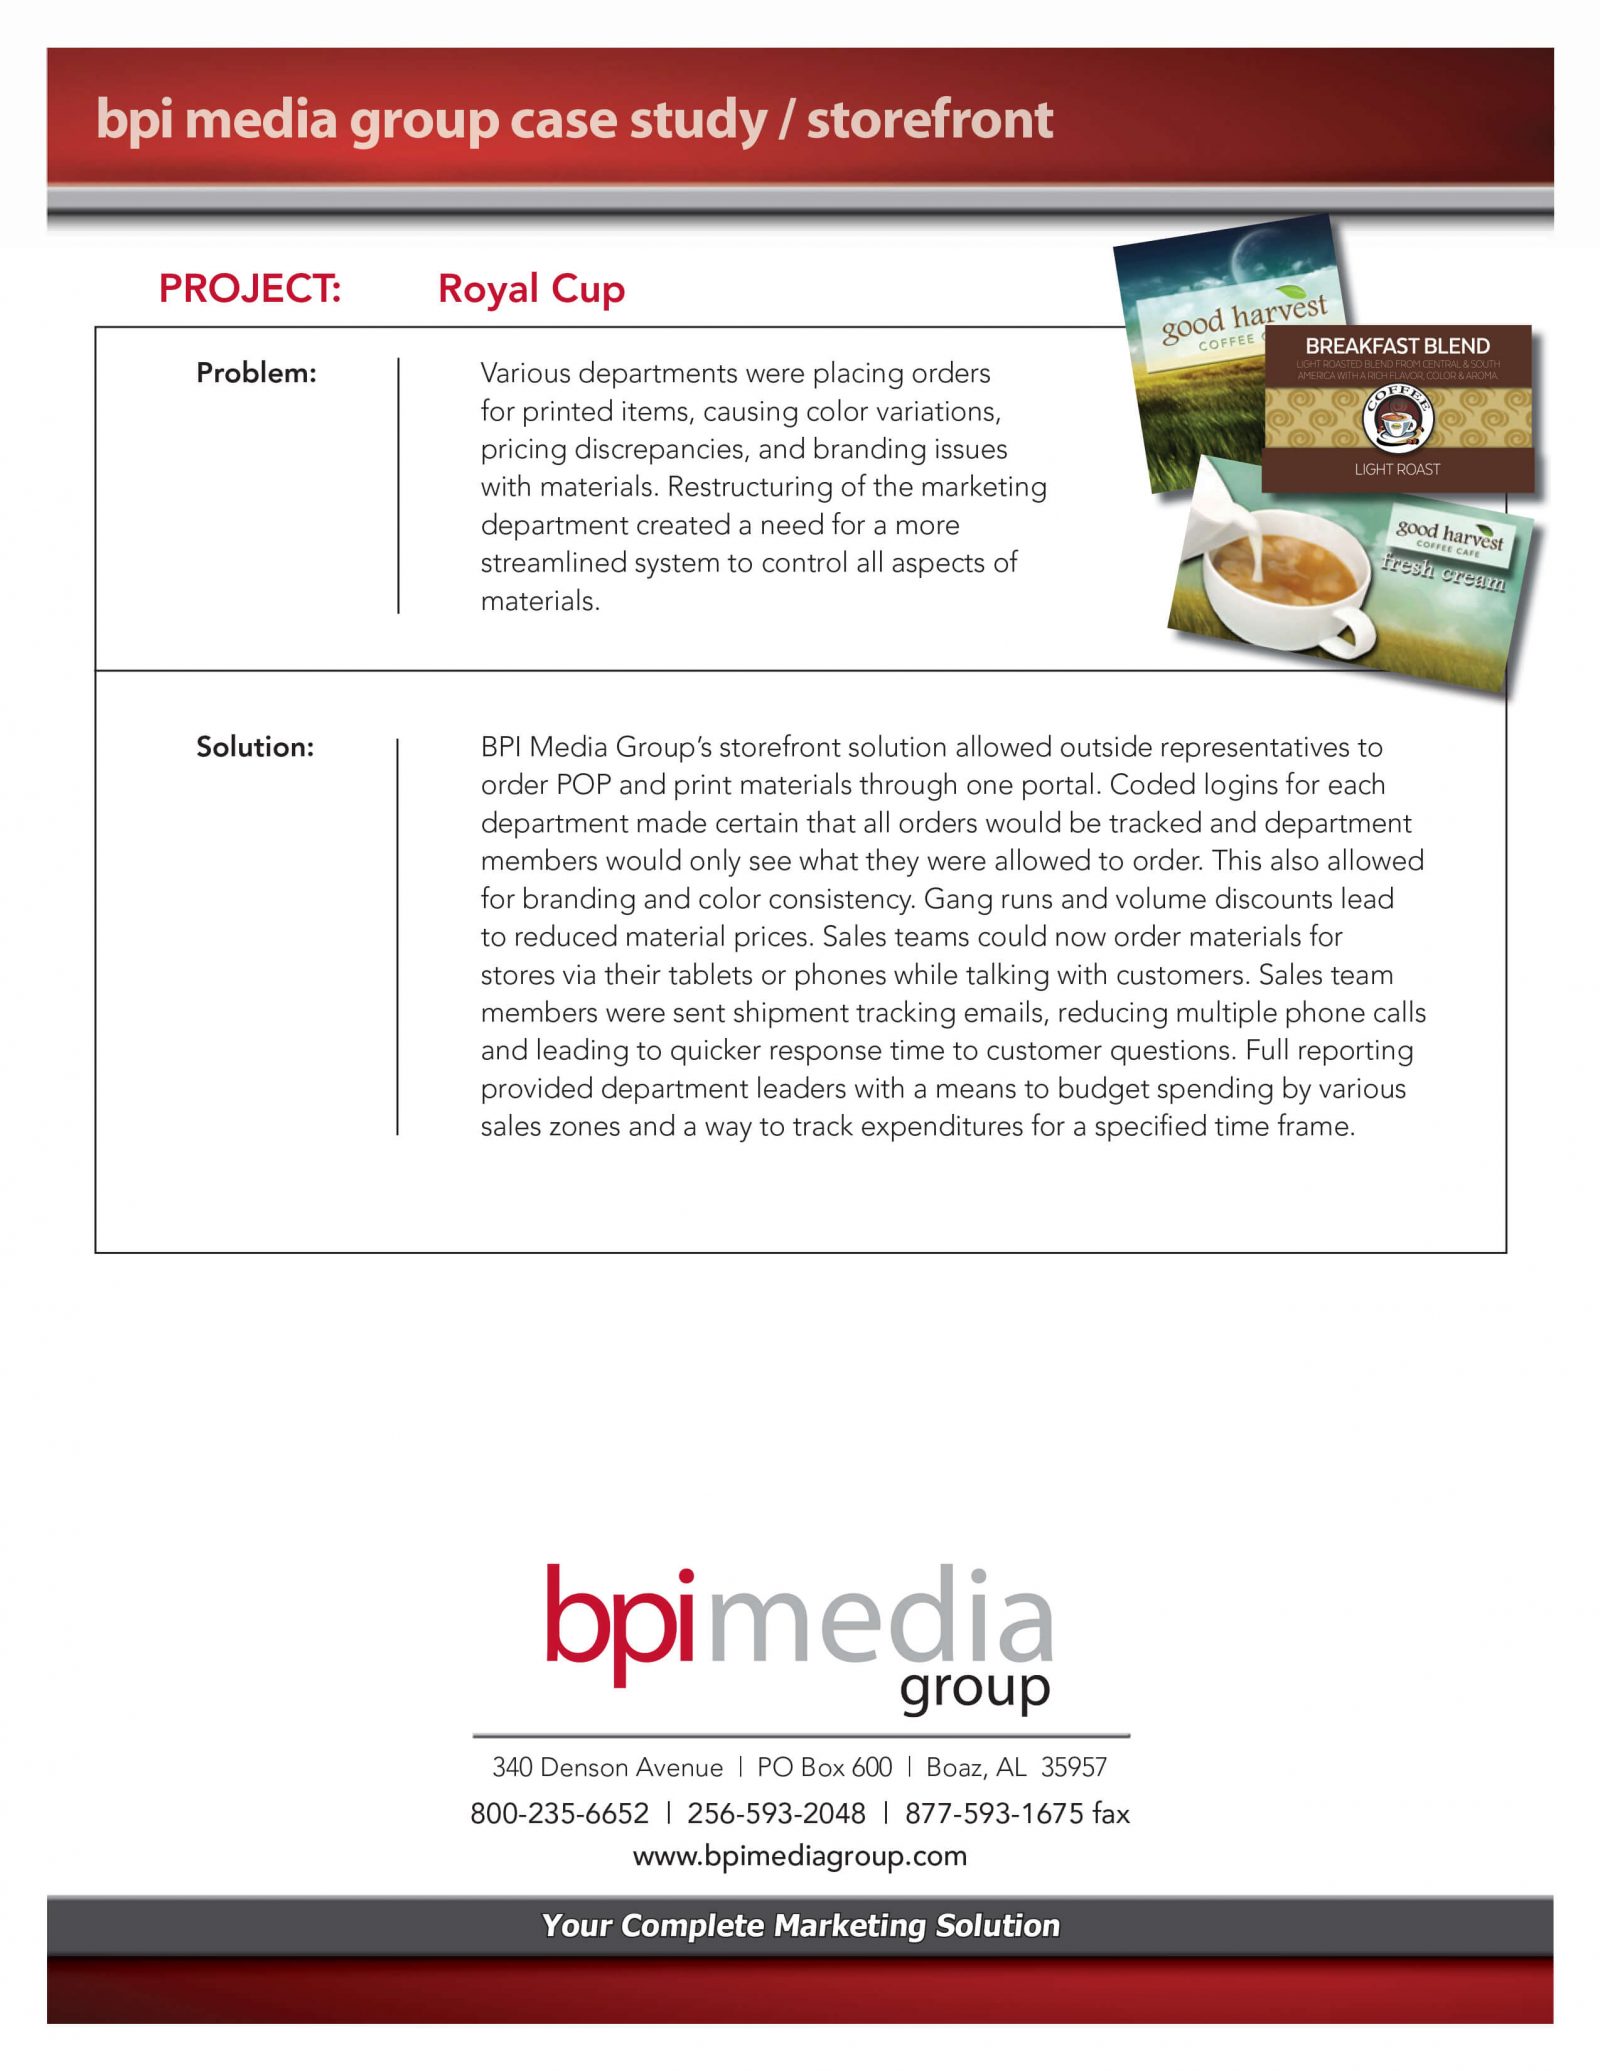 BPI Case Study - Royal Cup